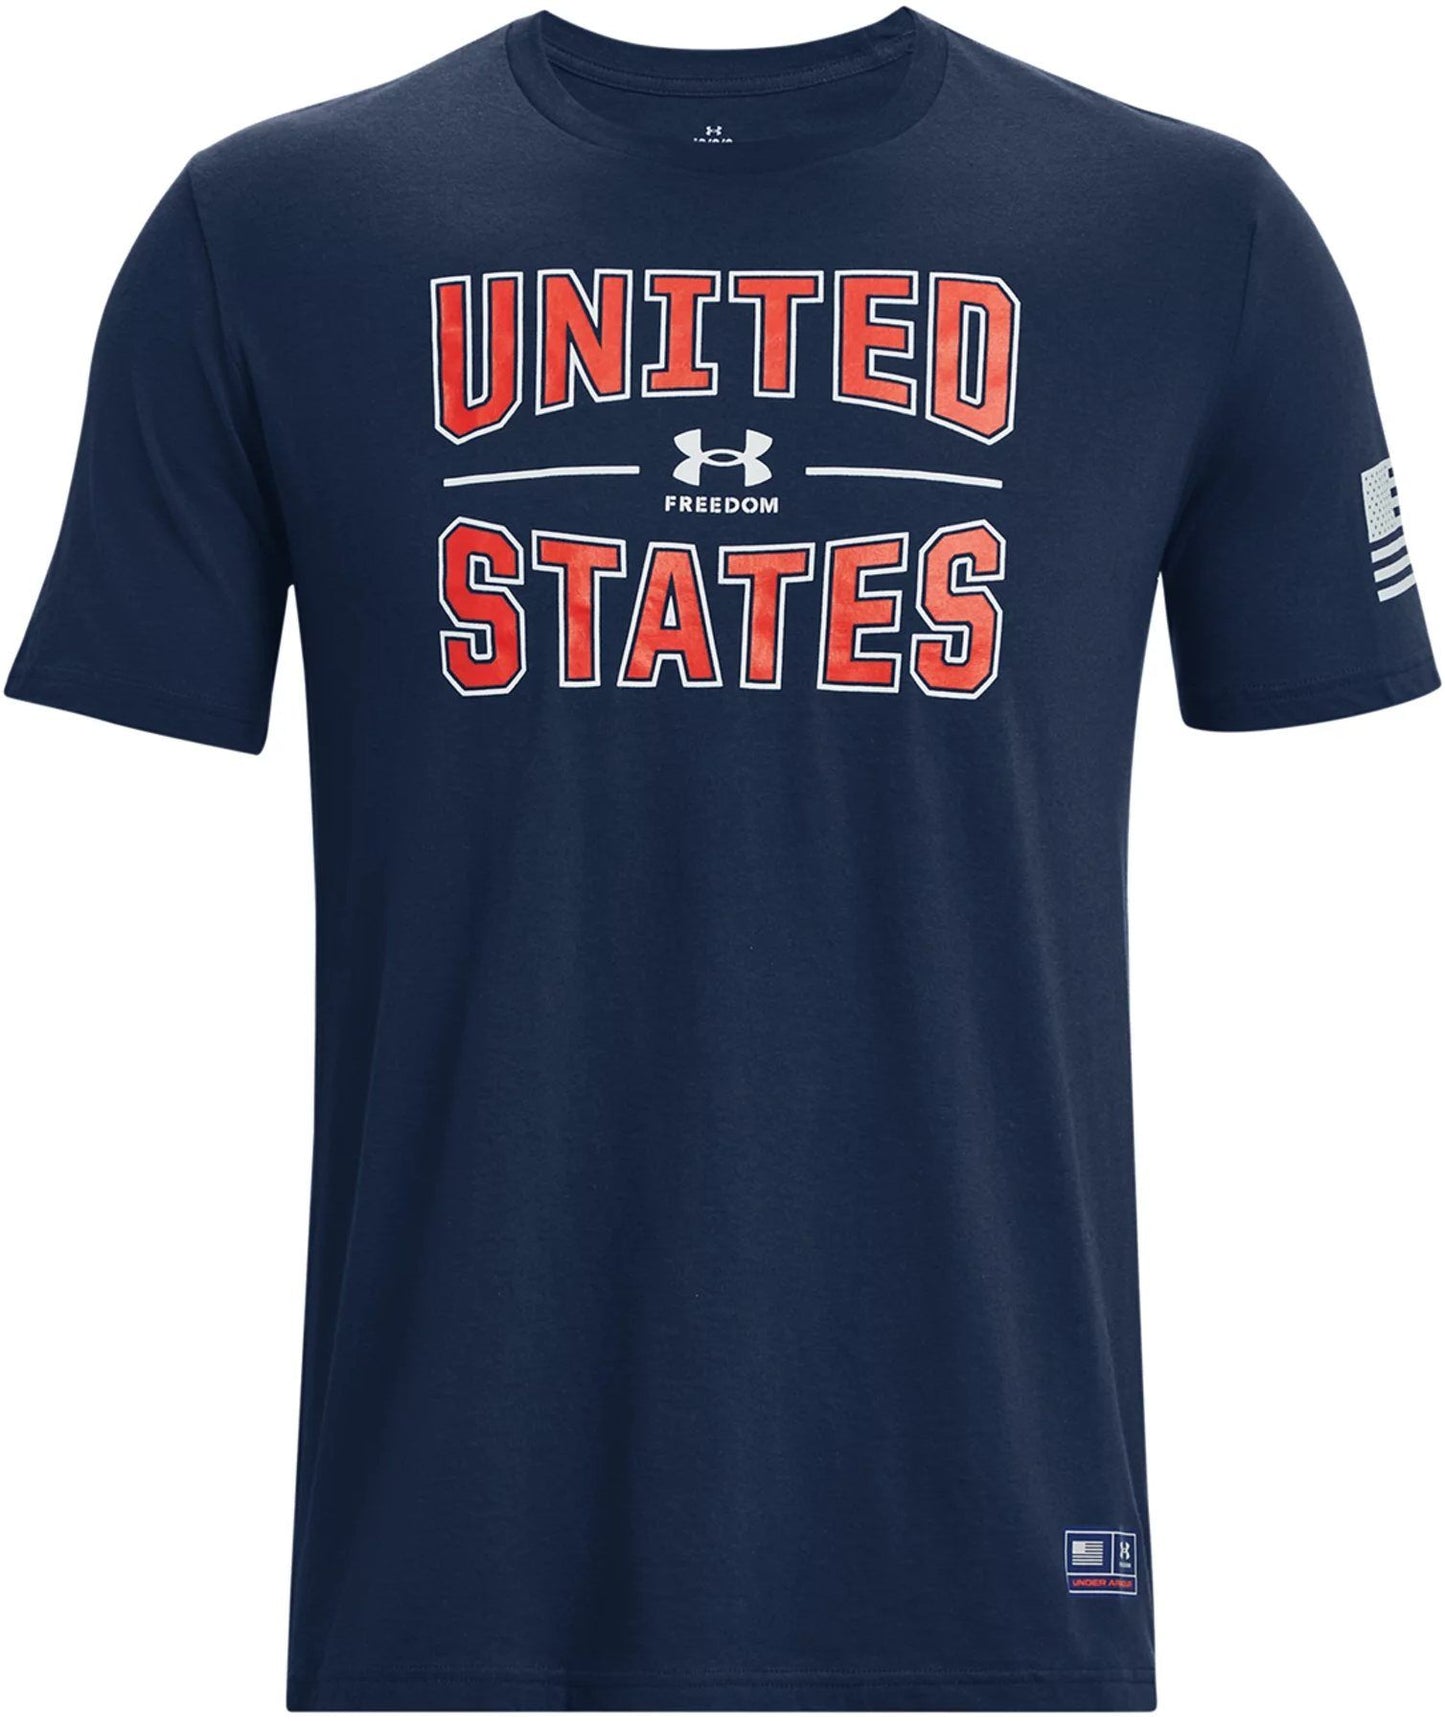 Under Armour Freedom United States T-Shirt-Tac Essentials